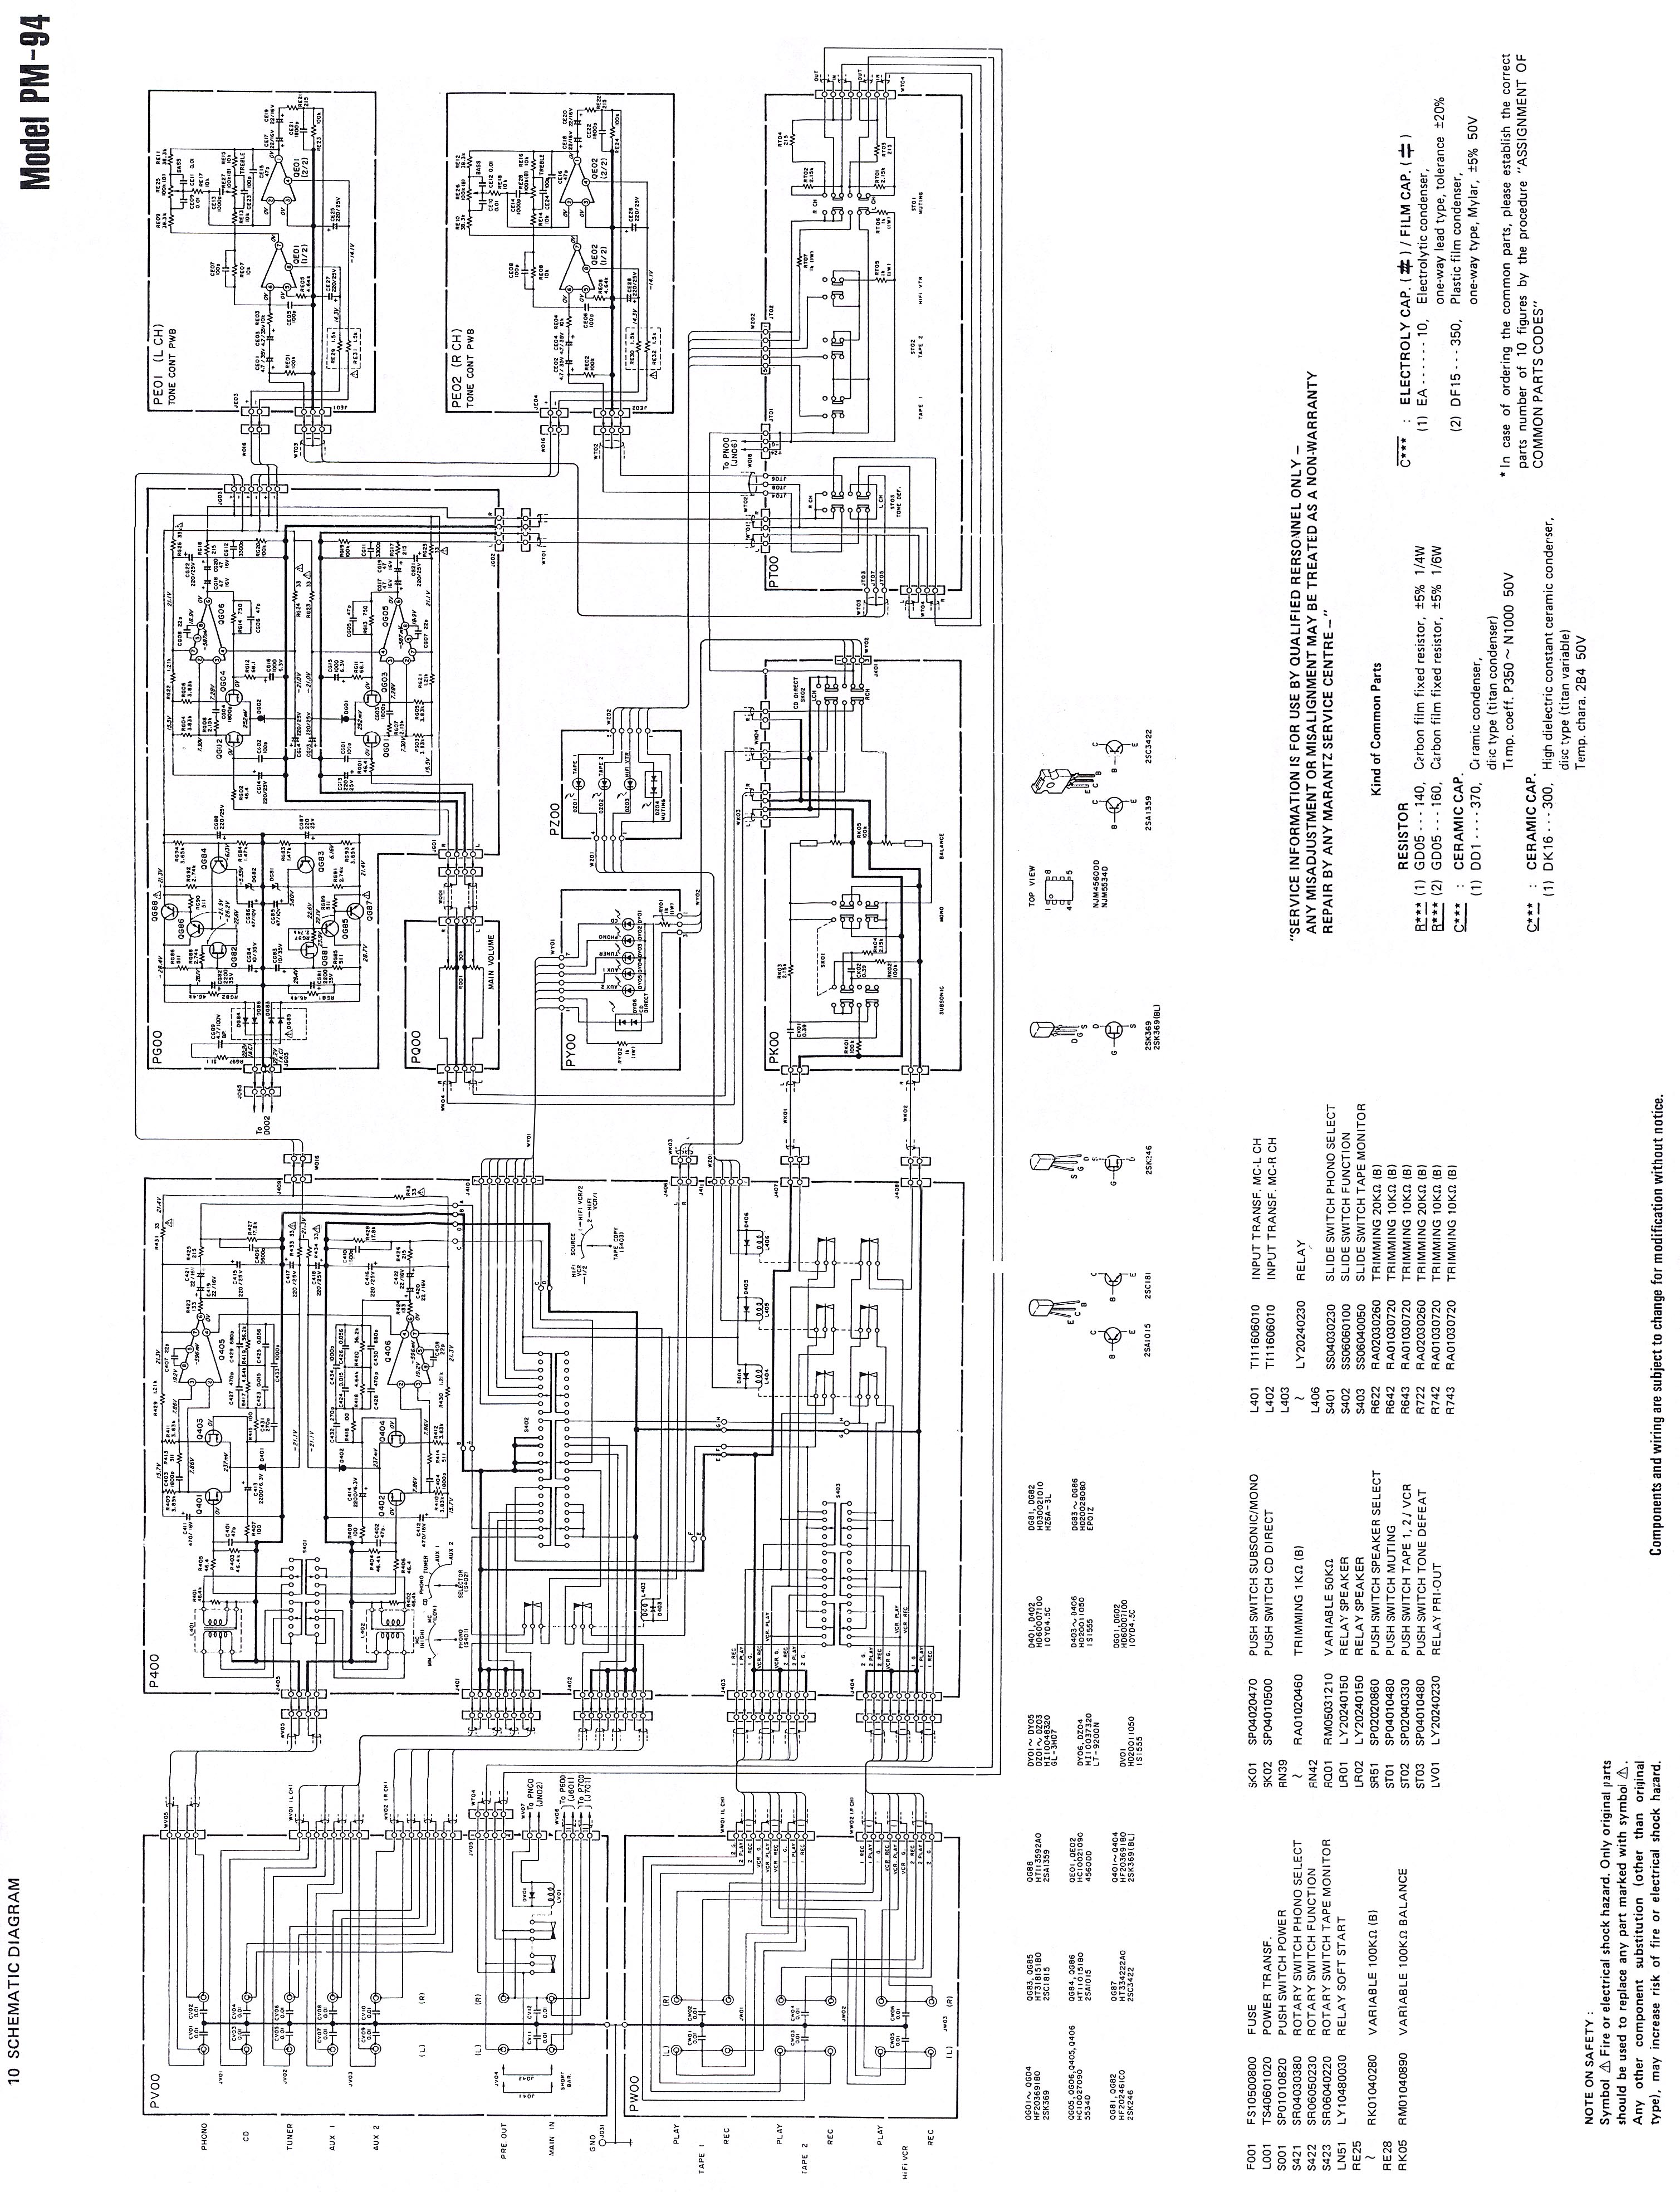 Marantz PM-94 Marantz PM-94 integrated power amplifier - Service manual.